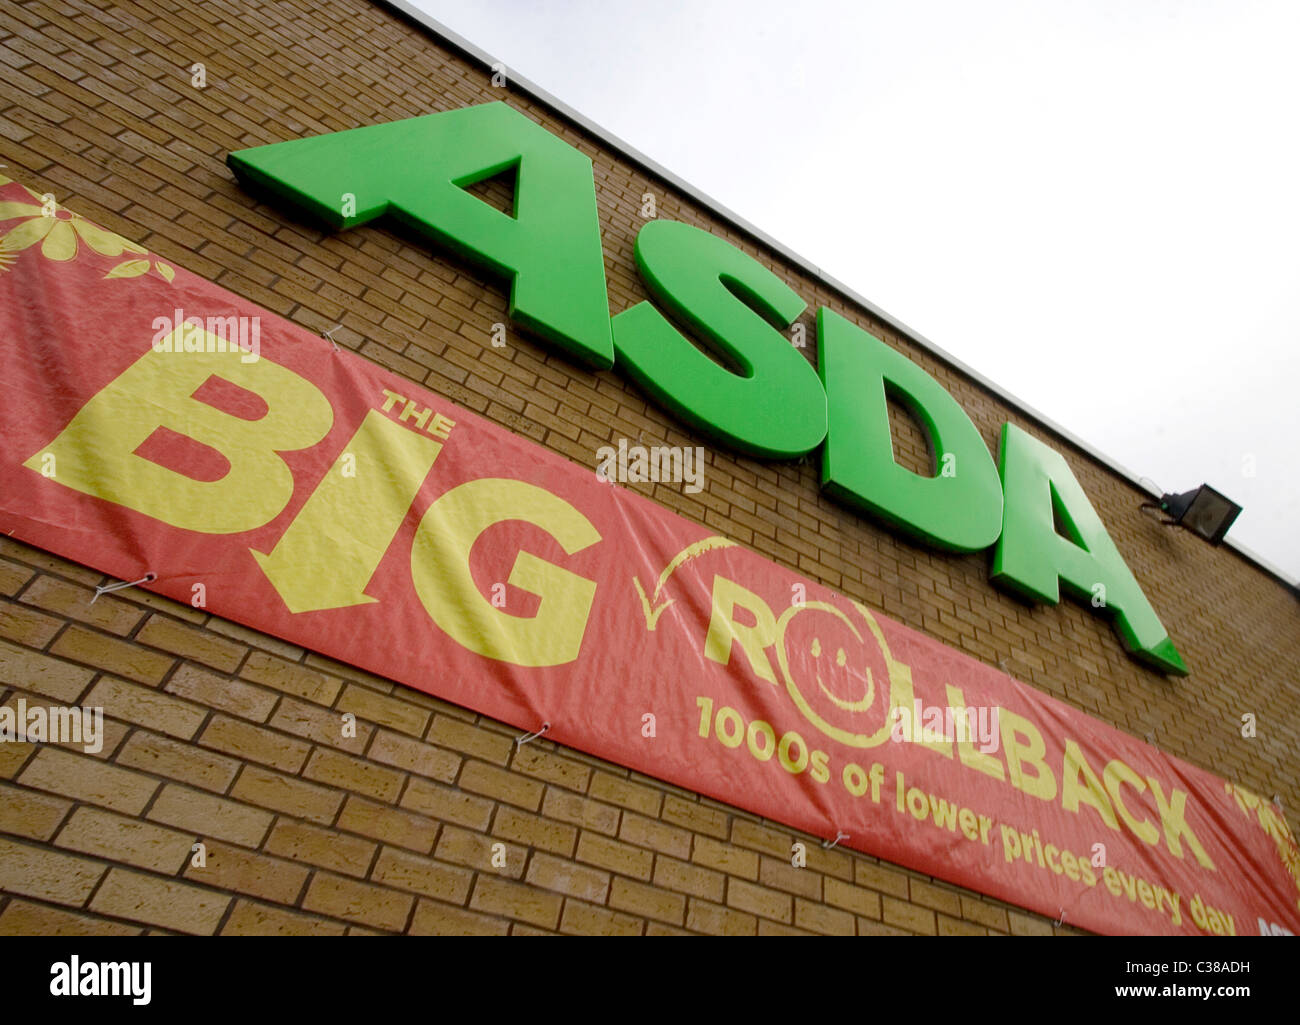 Asda Supermarket in Cambridge United Kingdom. Stock Photo